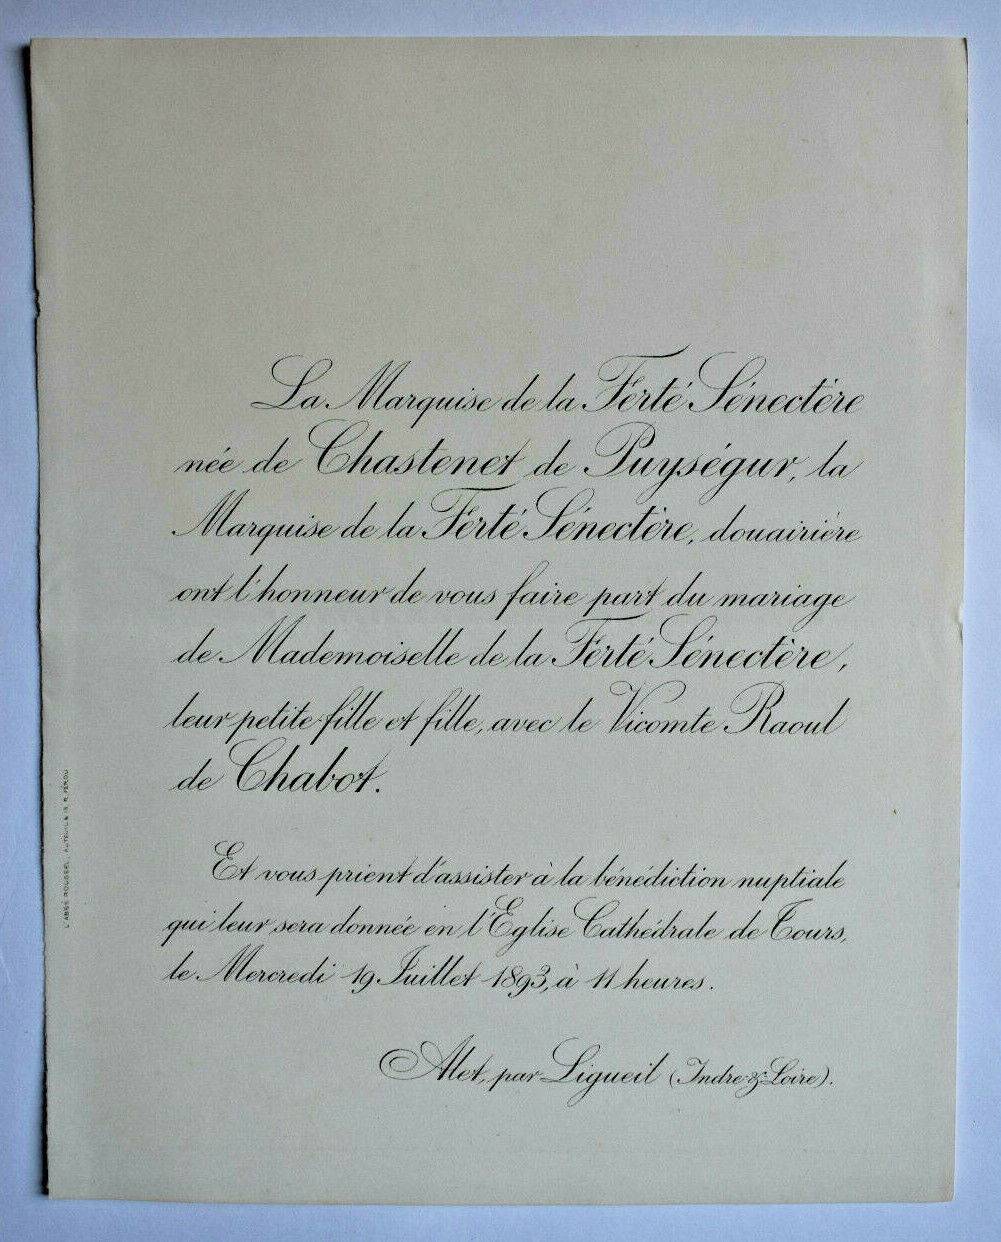 FERTE SENECTERE Chastenet Puysegur SHARE WEDDING Schoop Alet Ligueil 1893